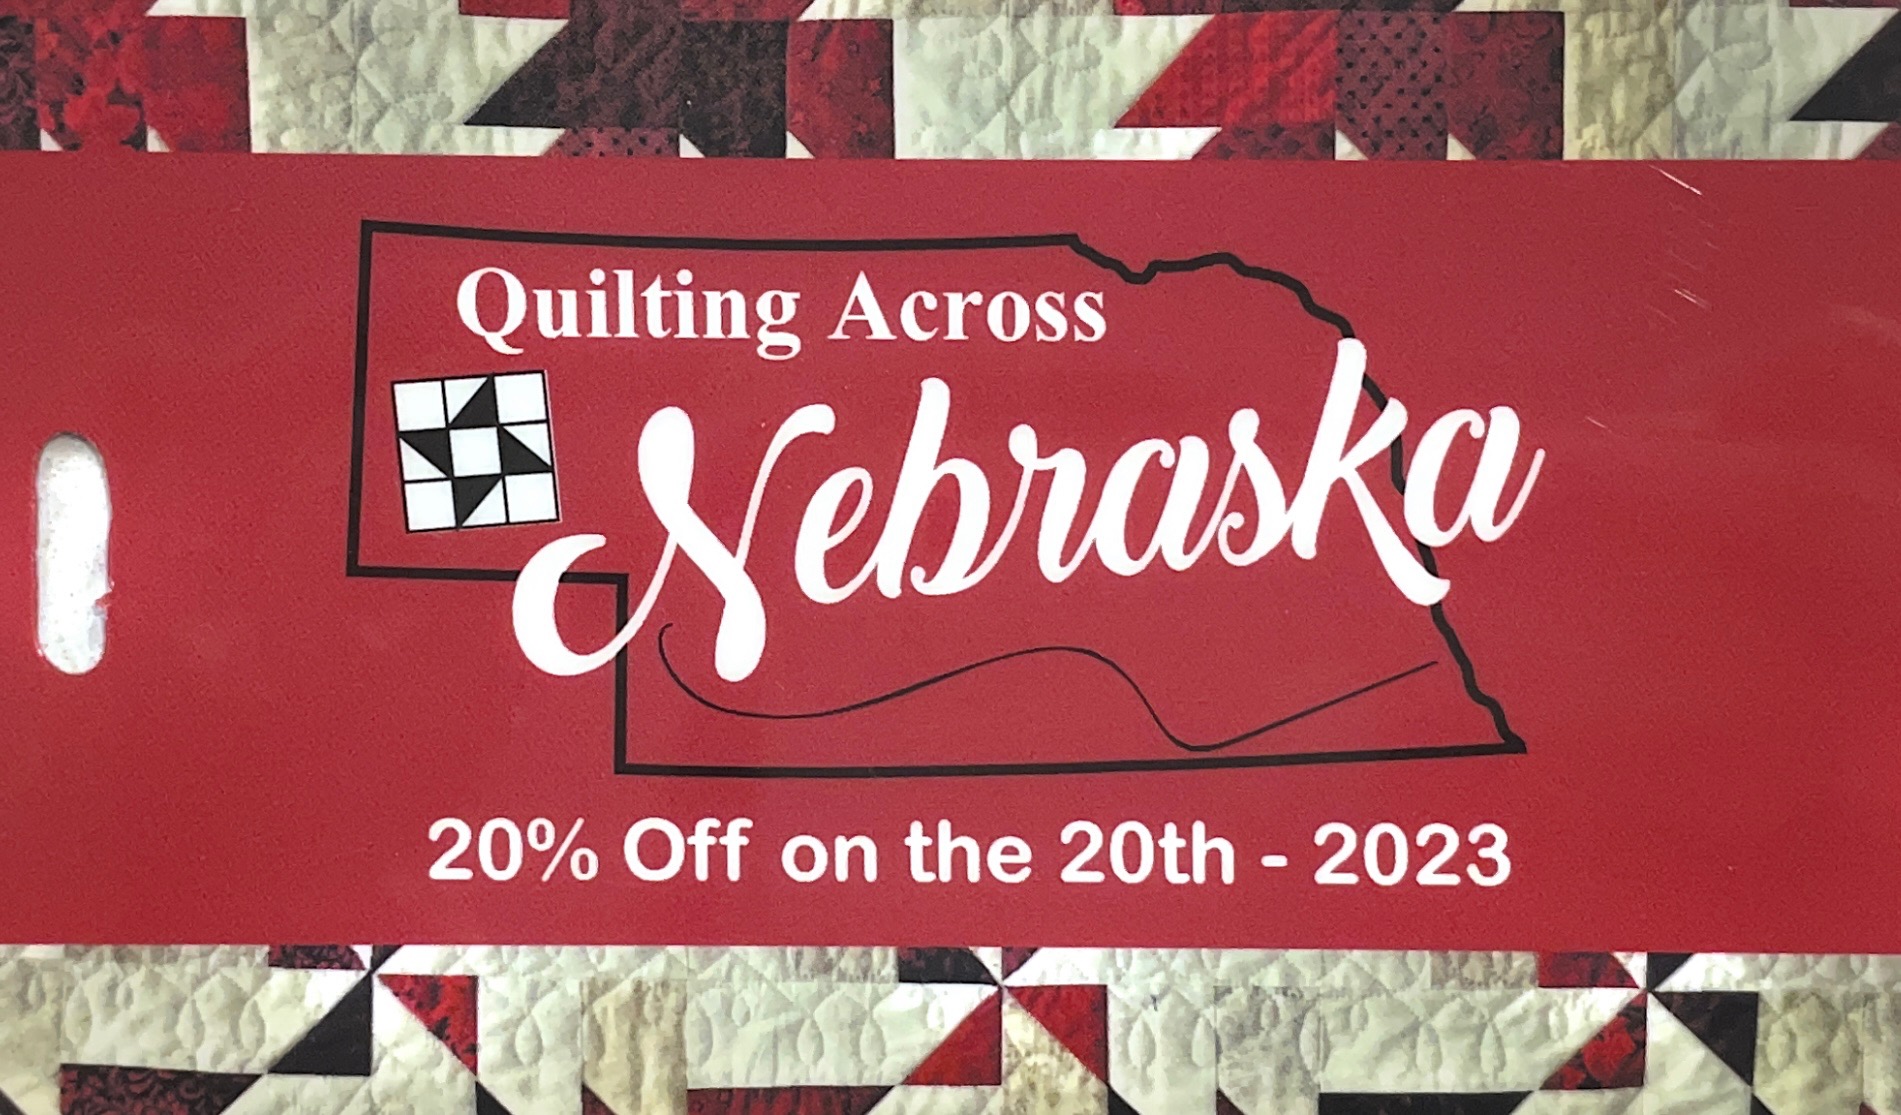 Nebraska Shop Hop 2023 Nebraska Independent Fabric Shops